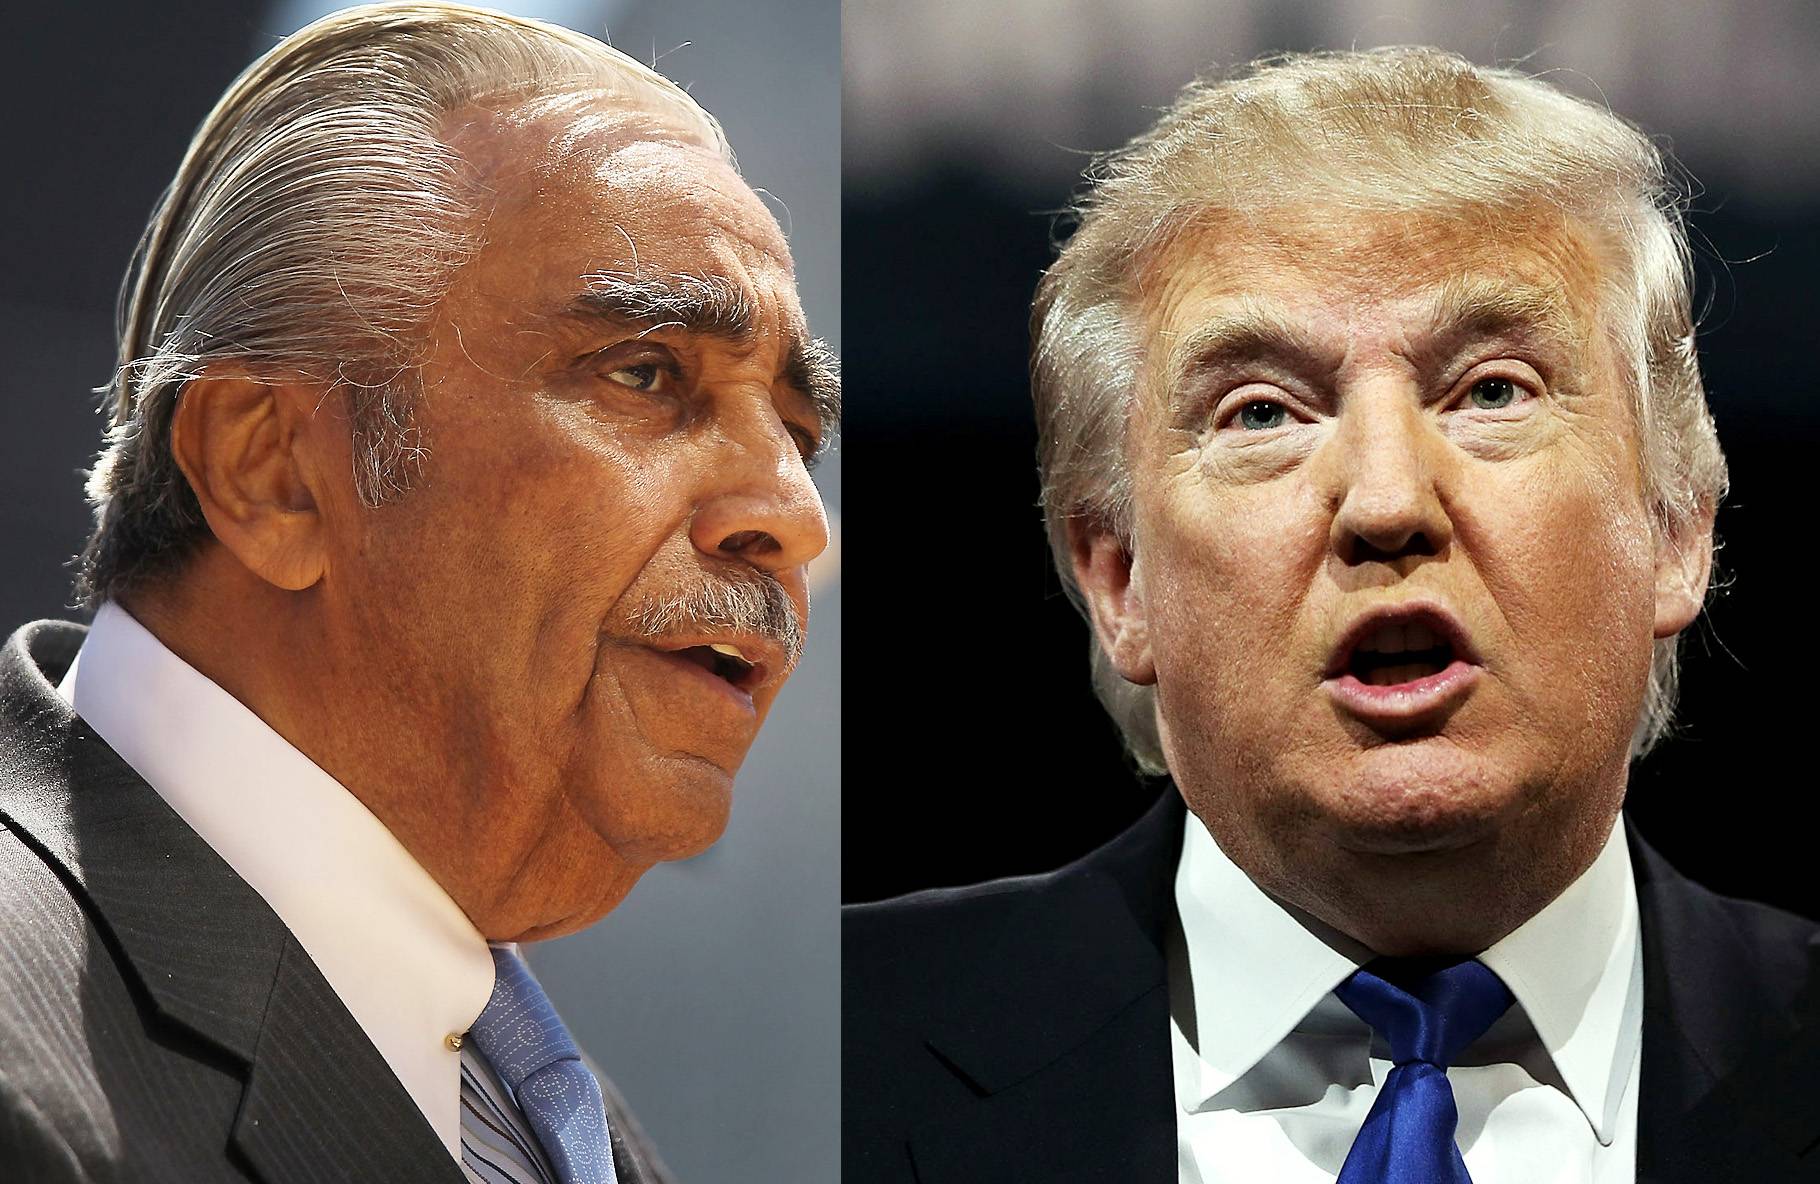 Donald Trump Compares Rep. Charlie Rangel to Paula Deen